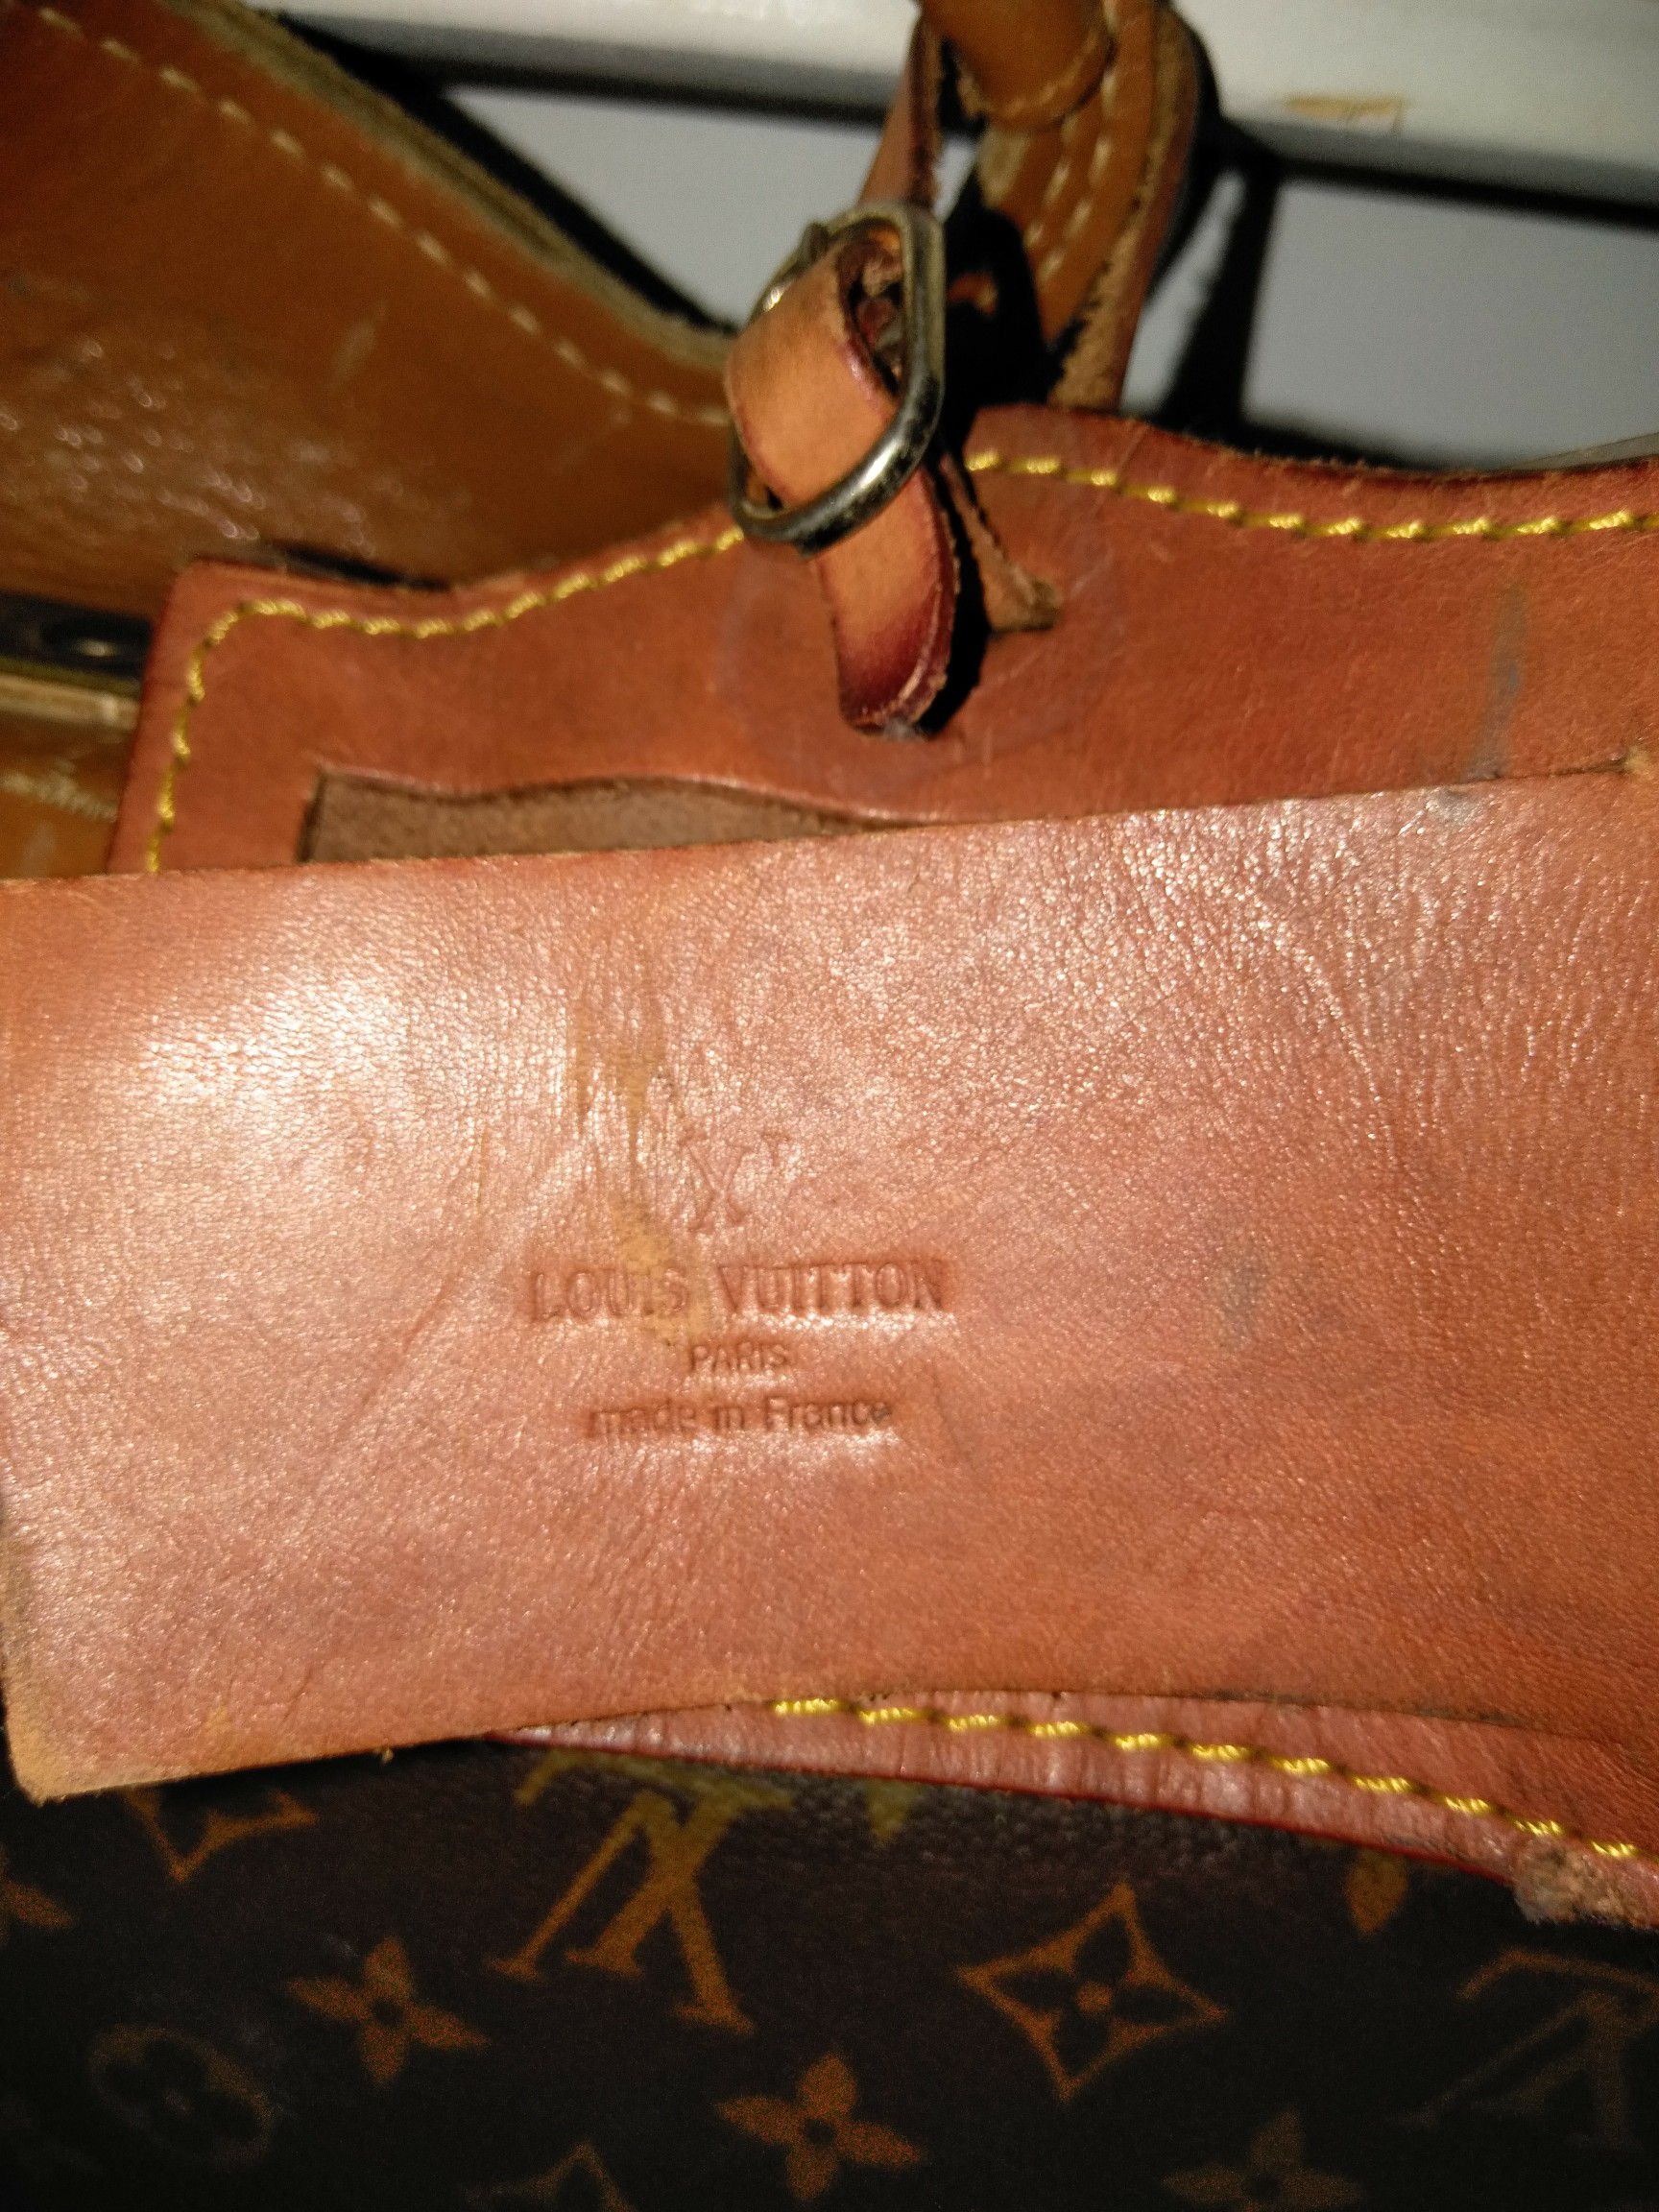 Louis Vuitton Garment Bag for Sale in Vernon Rockvl, CT - OfferUp